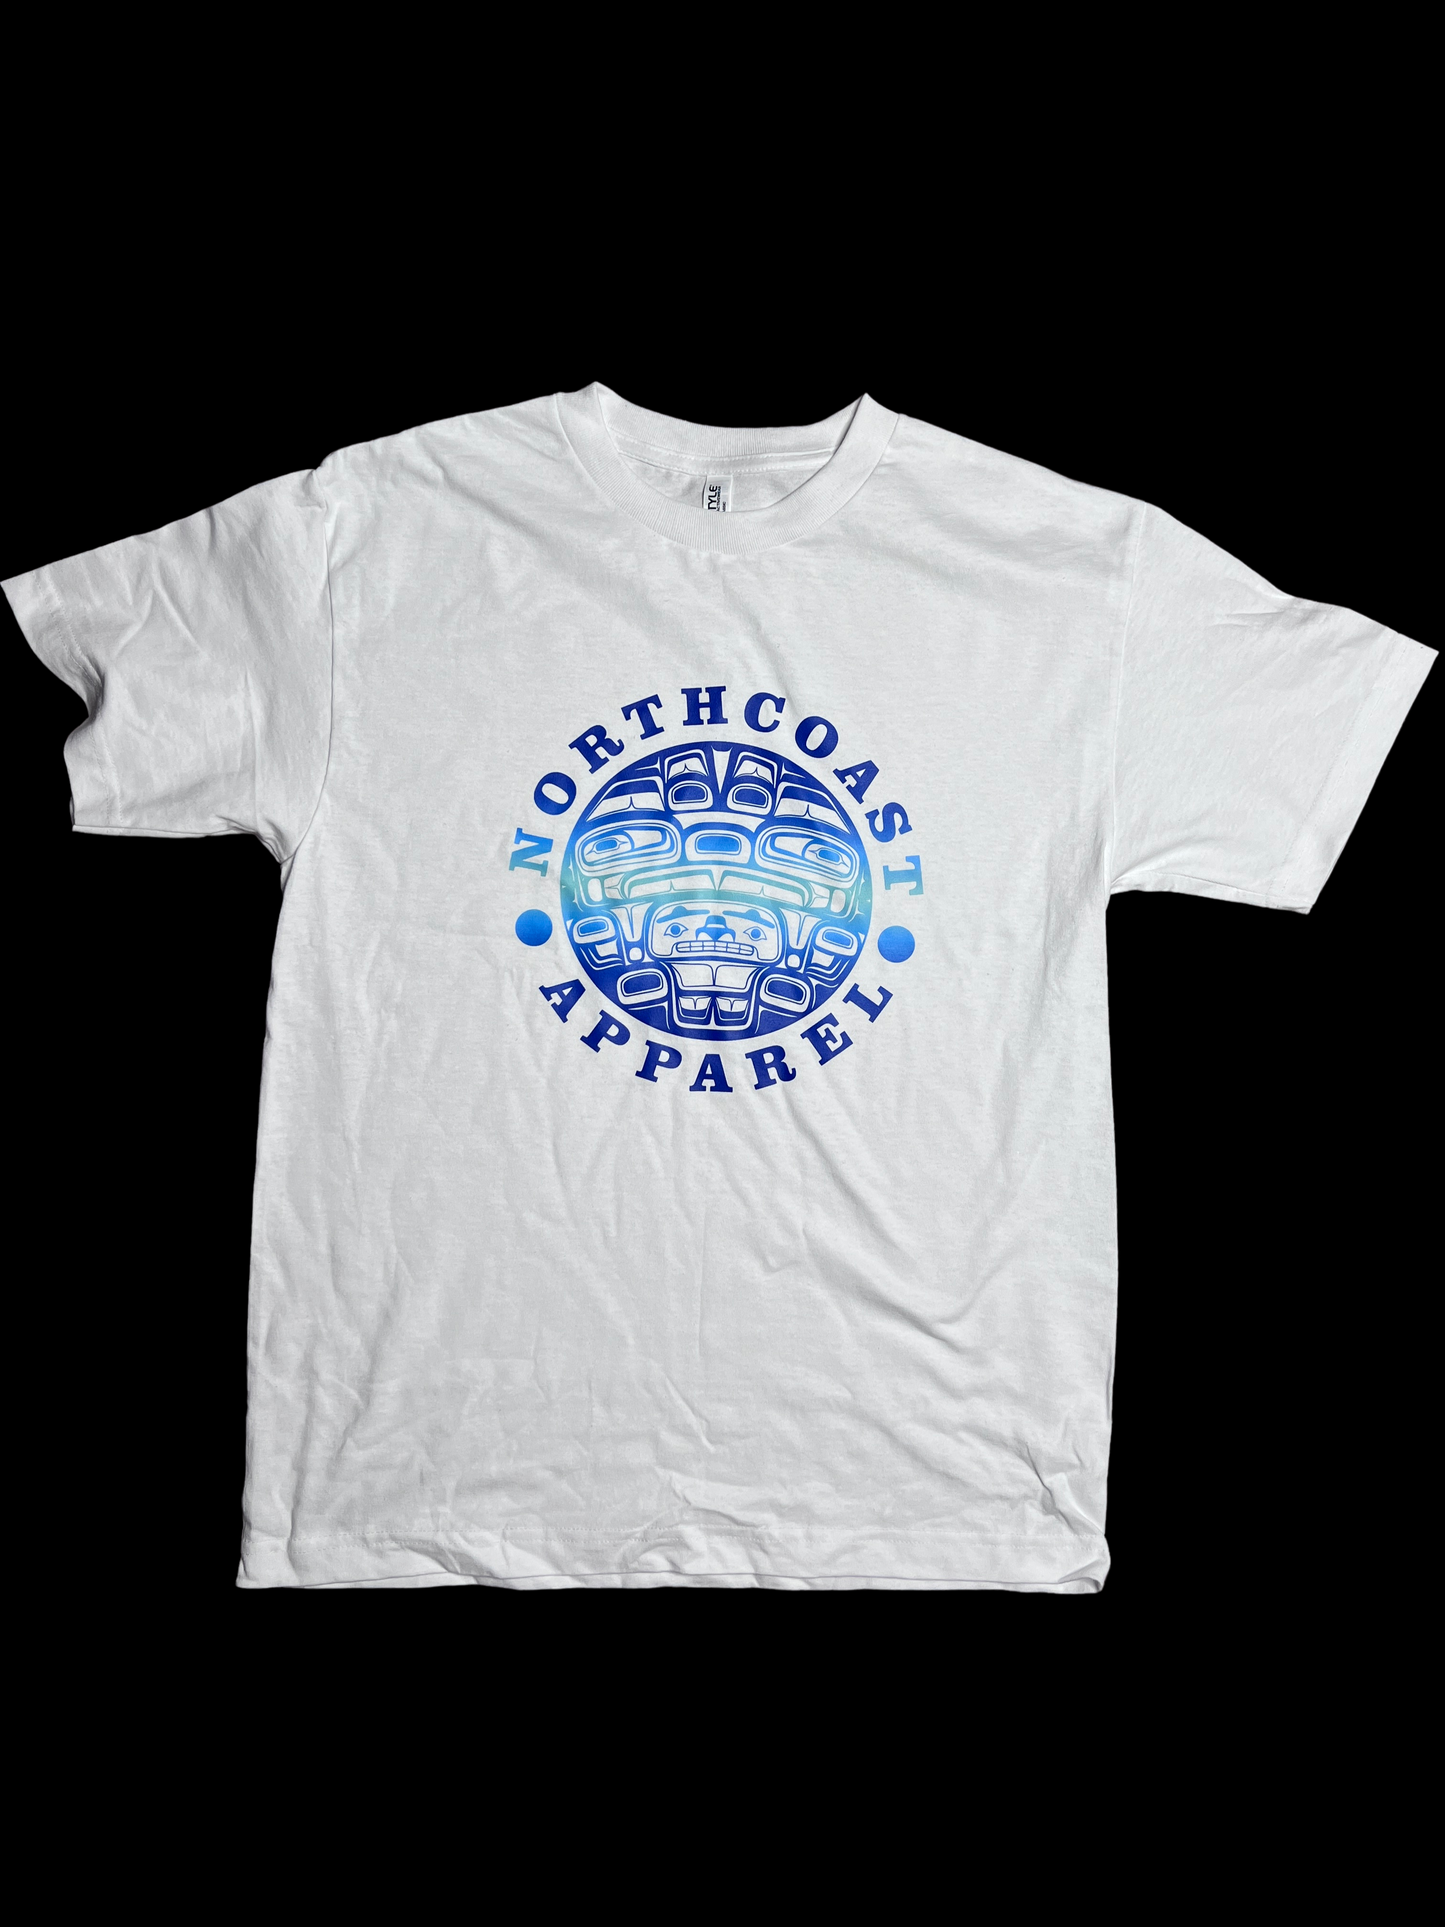 Northcoast Apparel T-shirt